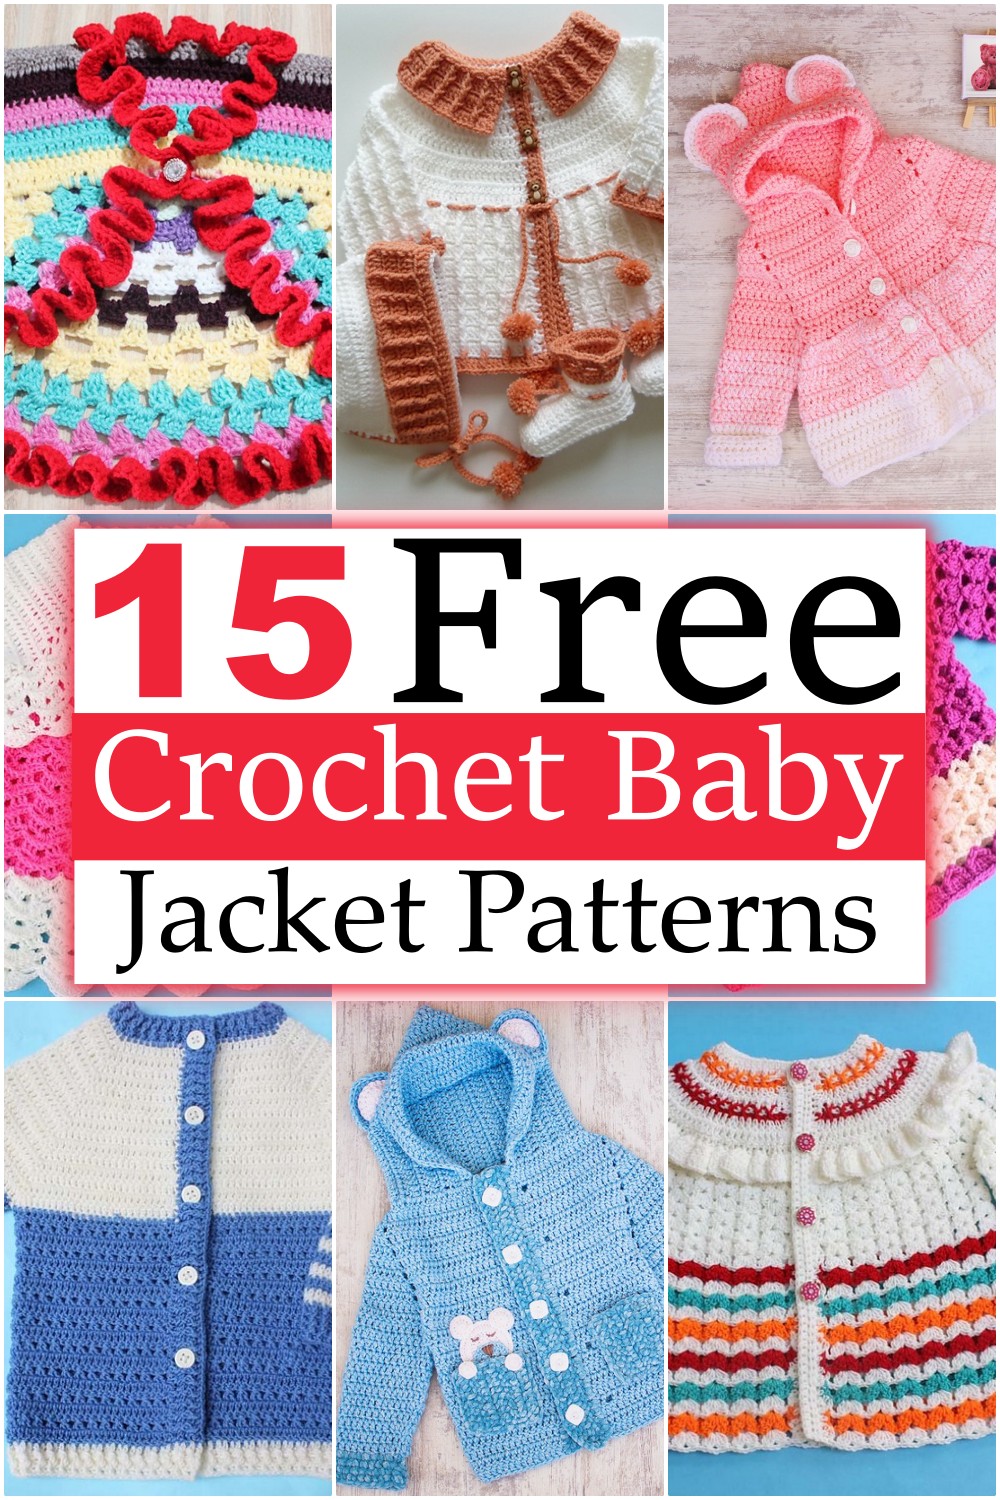 Crochet Baby Jacket Patterns